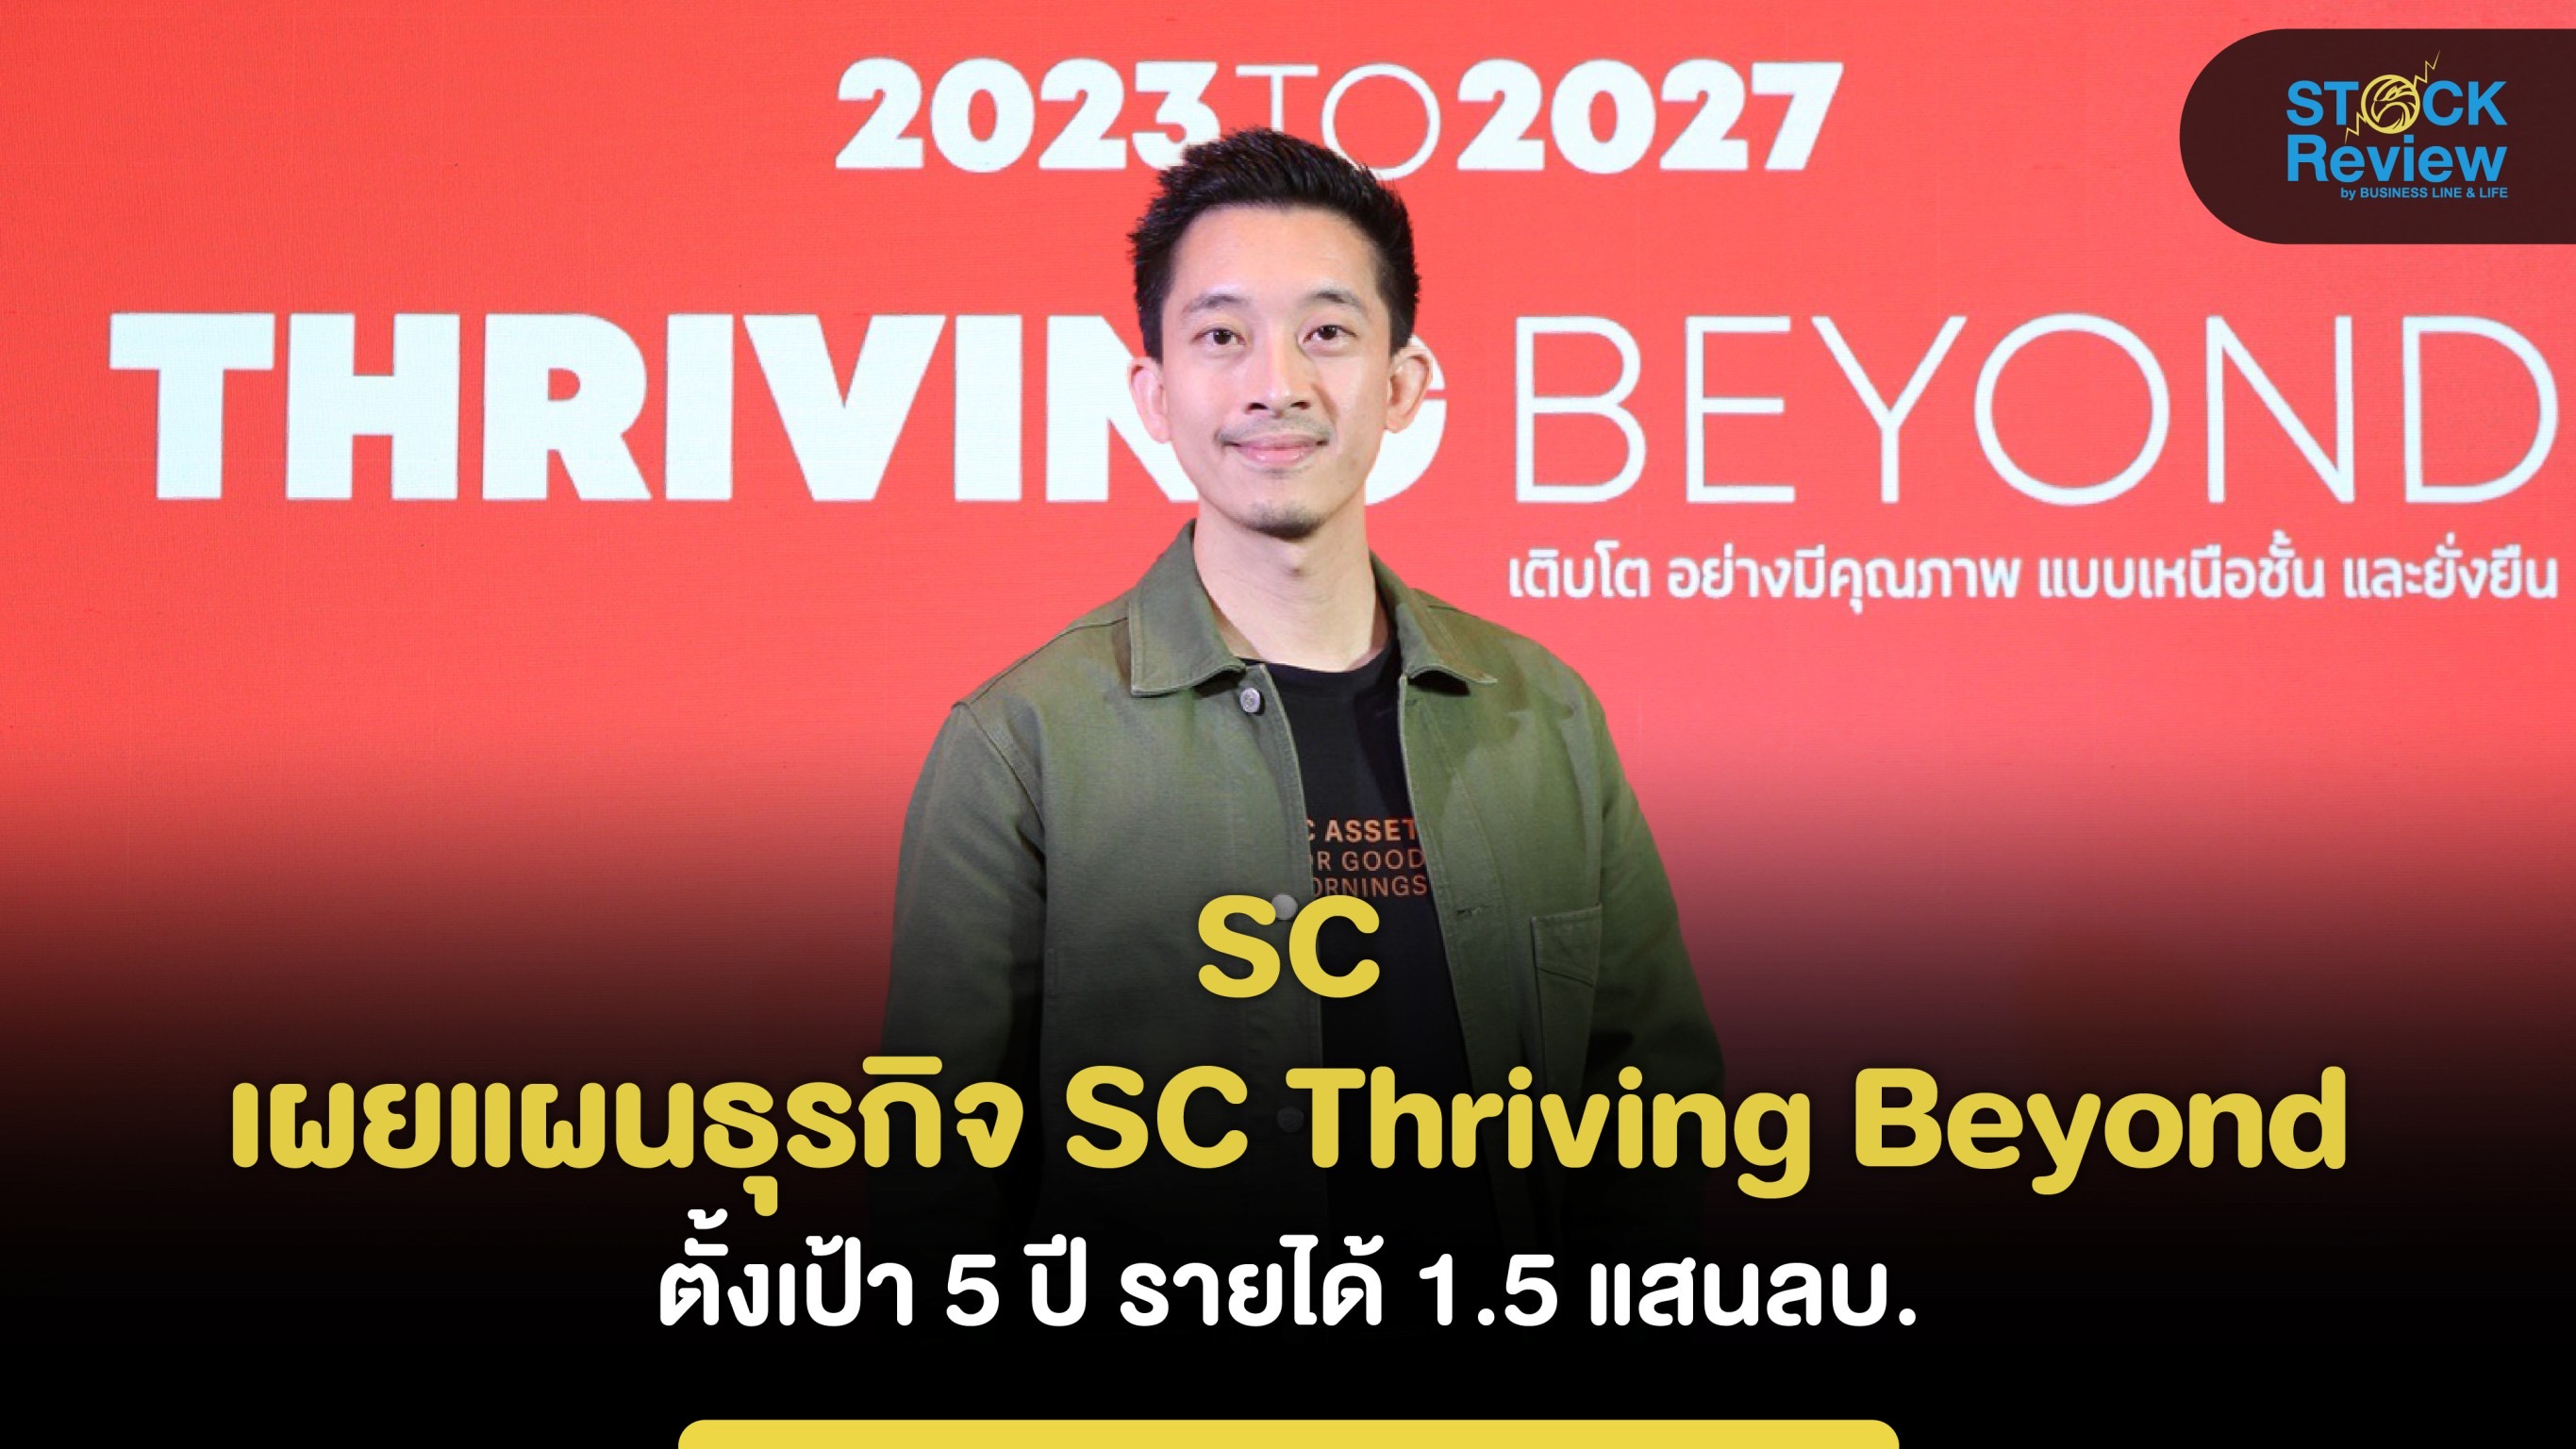 SC เผยแผนธุรกิจ SC Thriving Beyond ตั้งเป้า 5 ปี โกยรายได้ 1.5 แสนลบ.